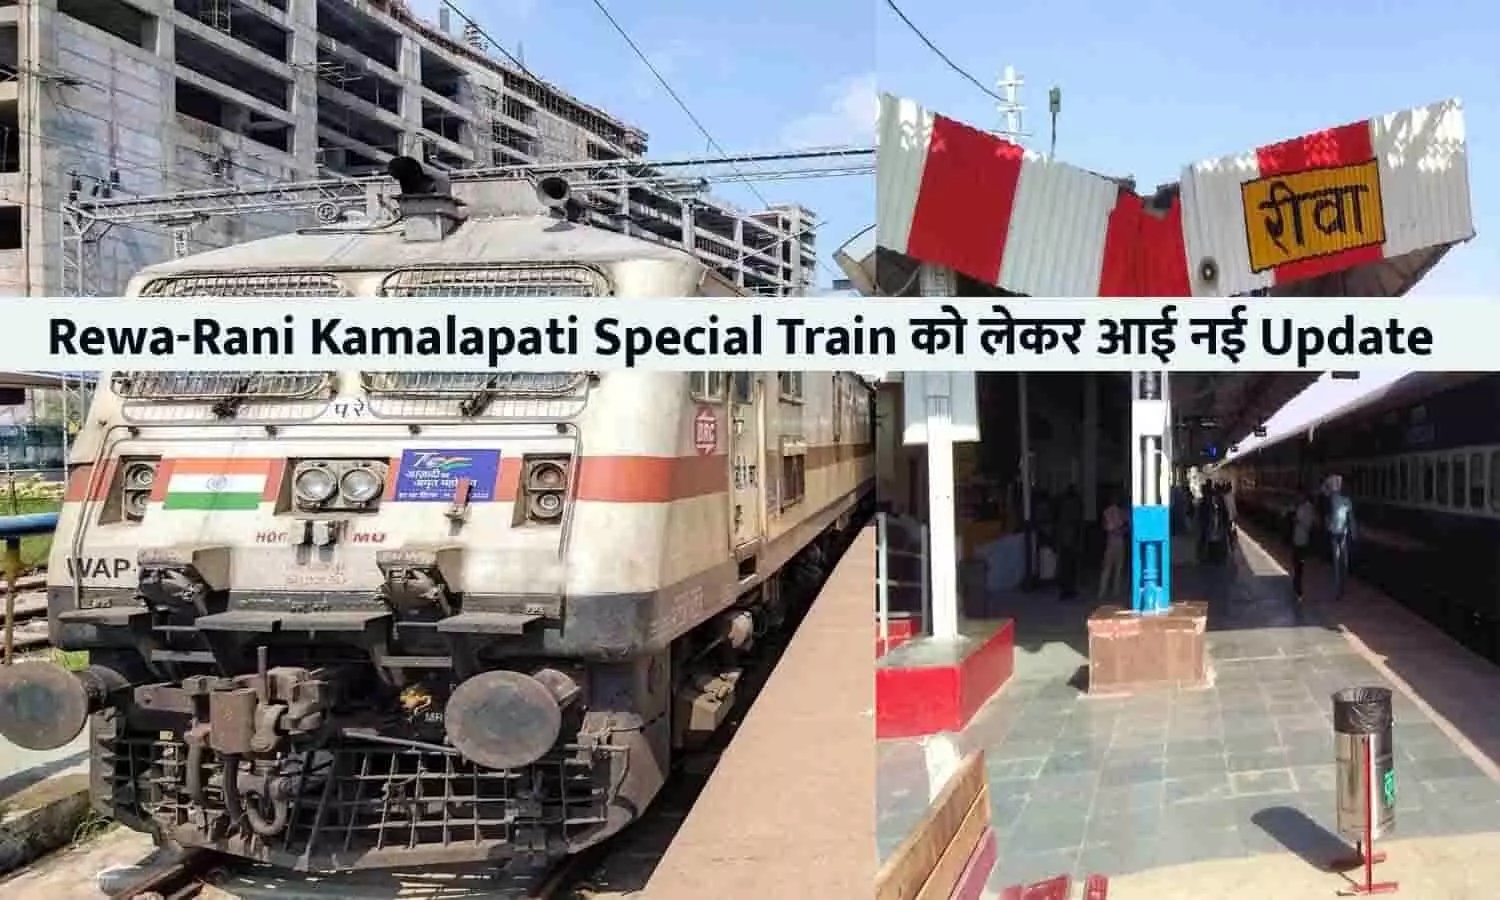 Rewa-Rani Kamalapati Special Train को लेकर आई नई Update, यात्रियों के लिए जानना बेहद जरूरी